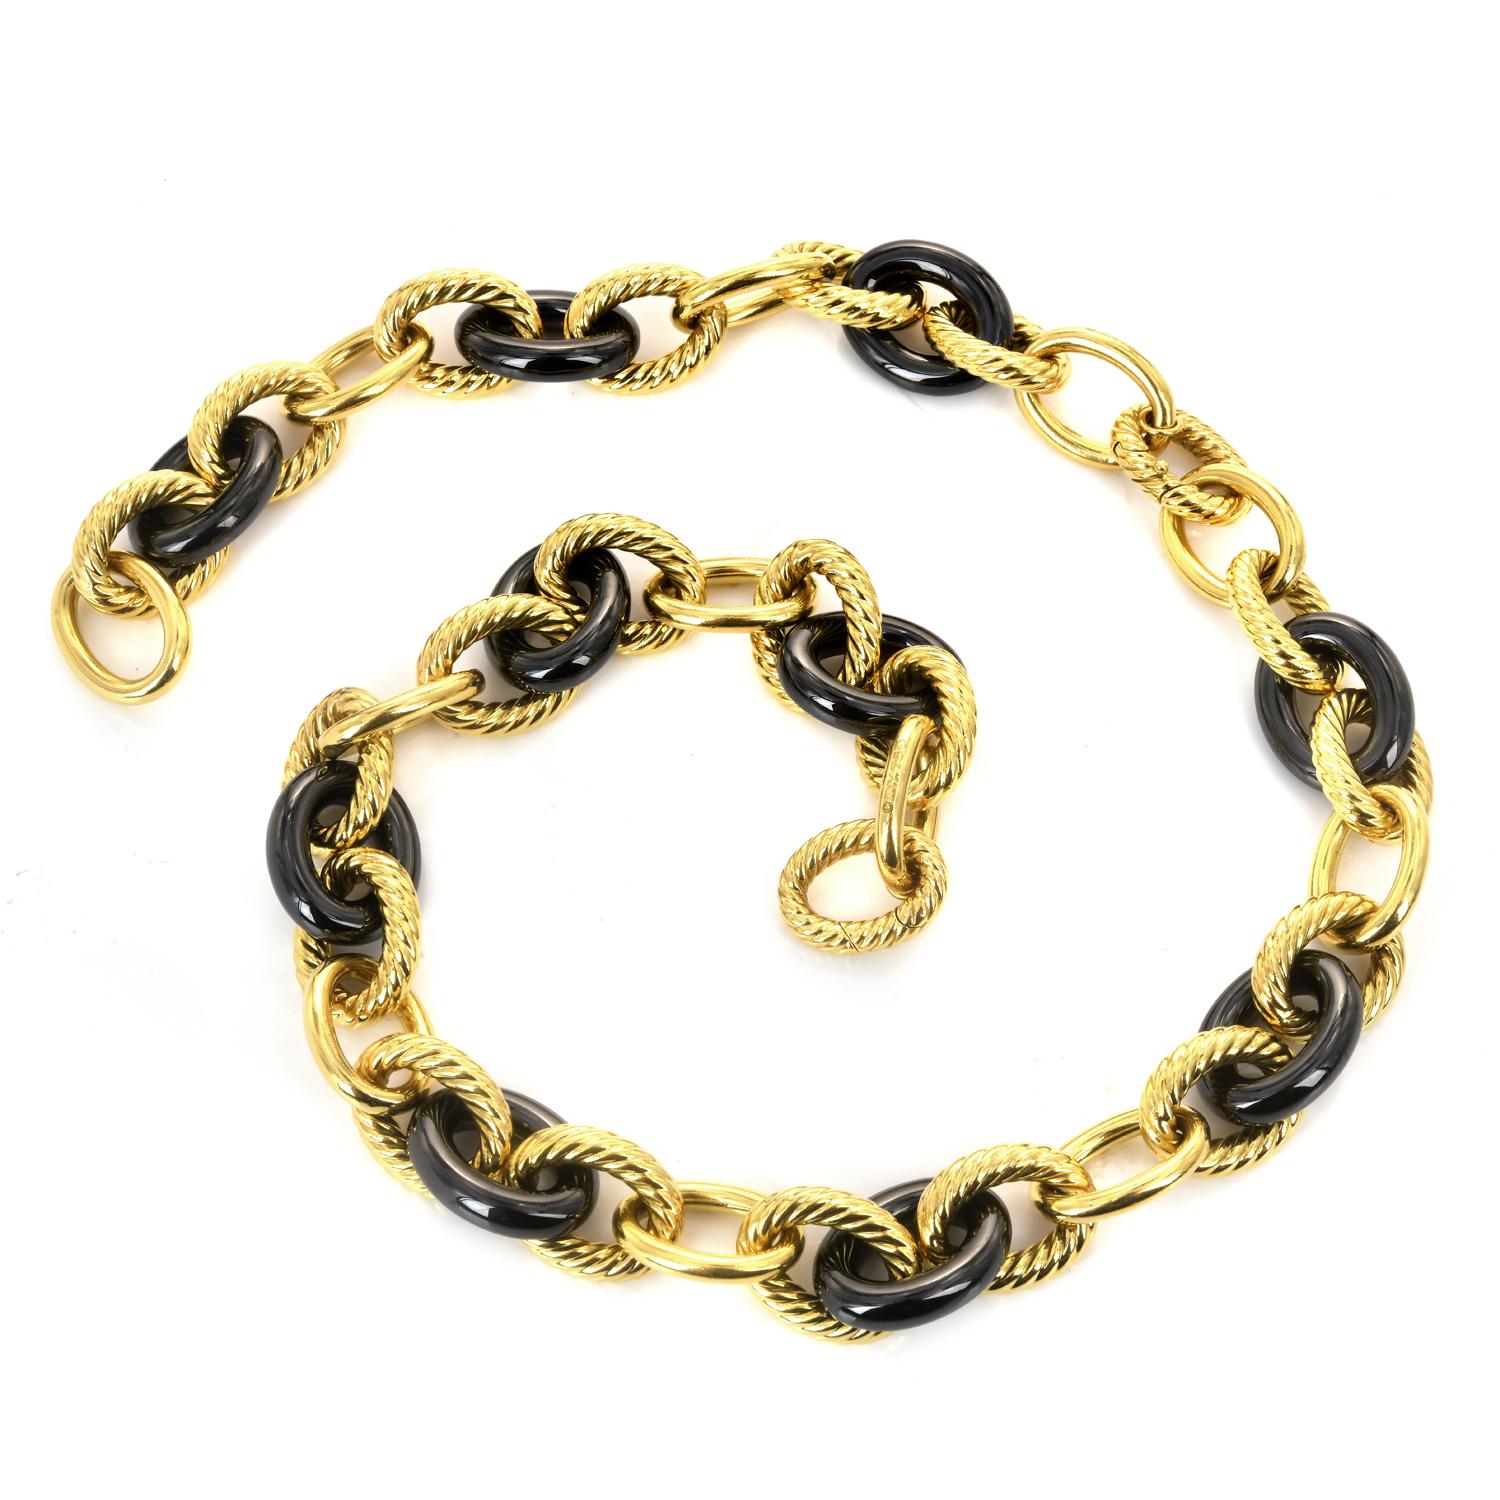 Uncut David Yurman 18K Yellow Gold Hematite 17 mm Large Link Chain Necklace For Sale